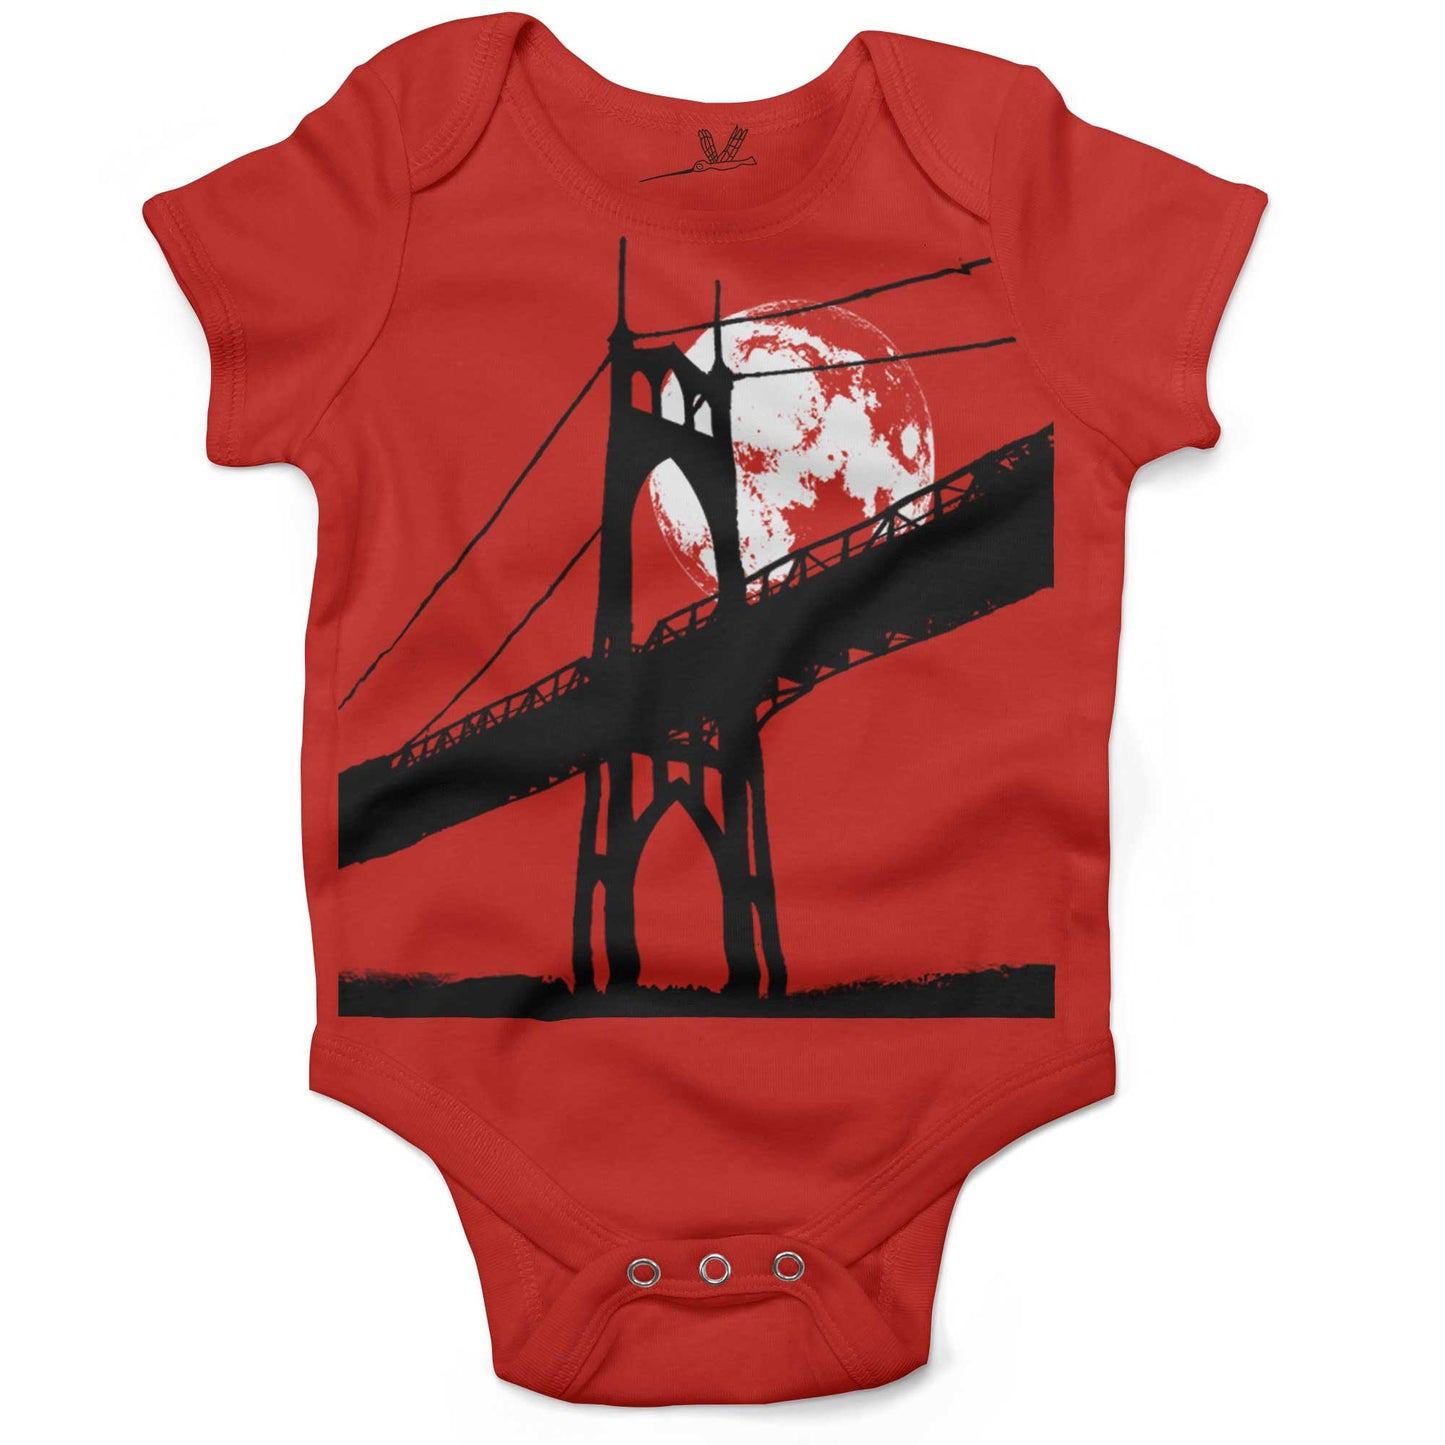 St Johns Bridge Under A Full Moon Infant Bodysuit-Organic Red-3-6 months